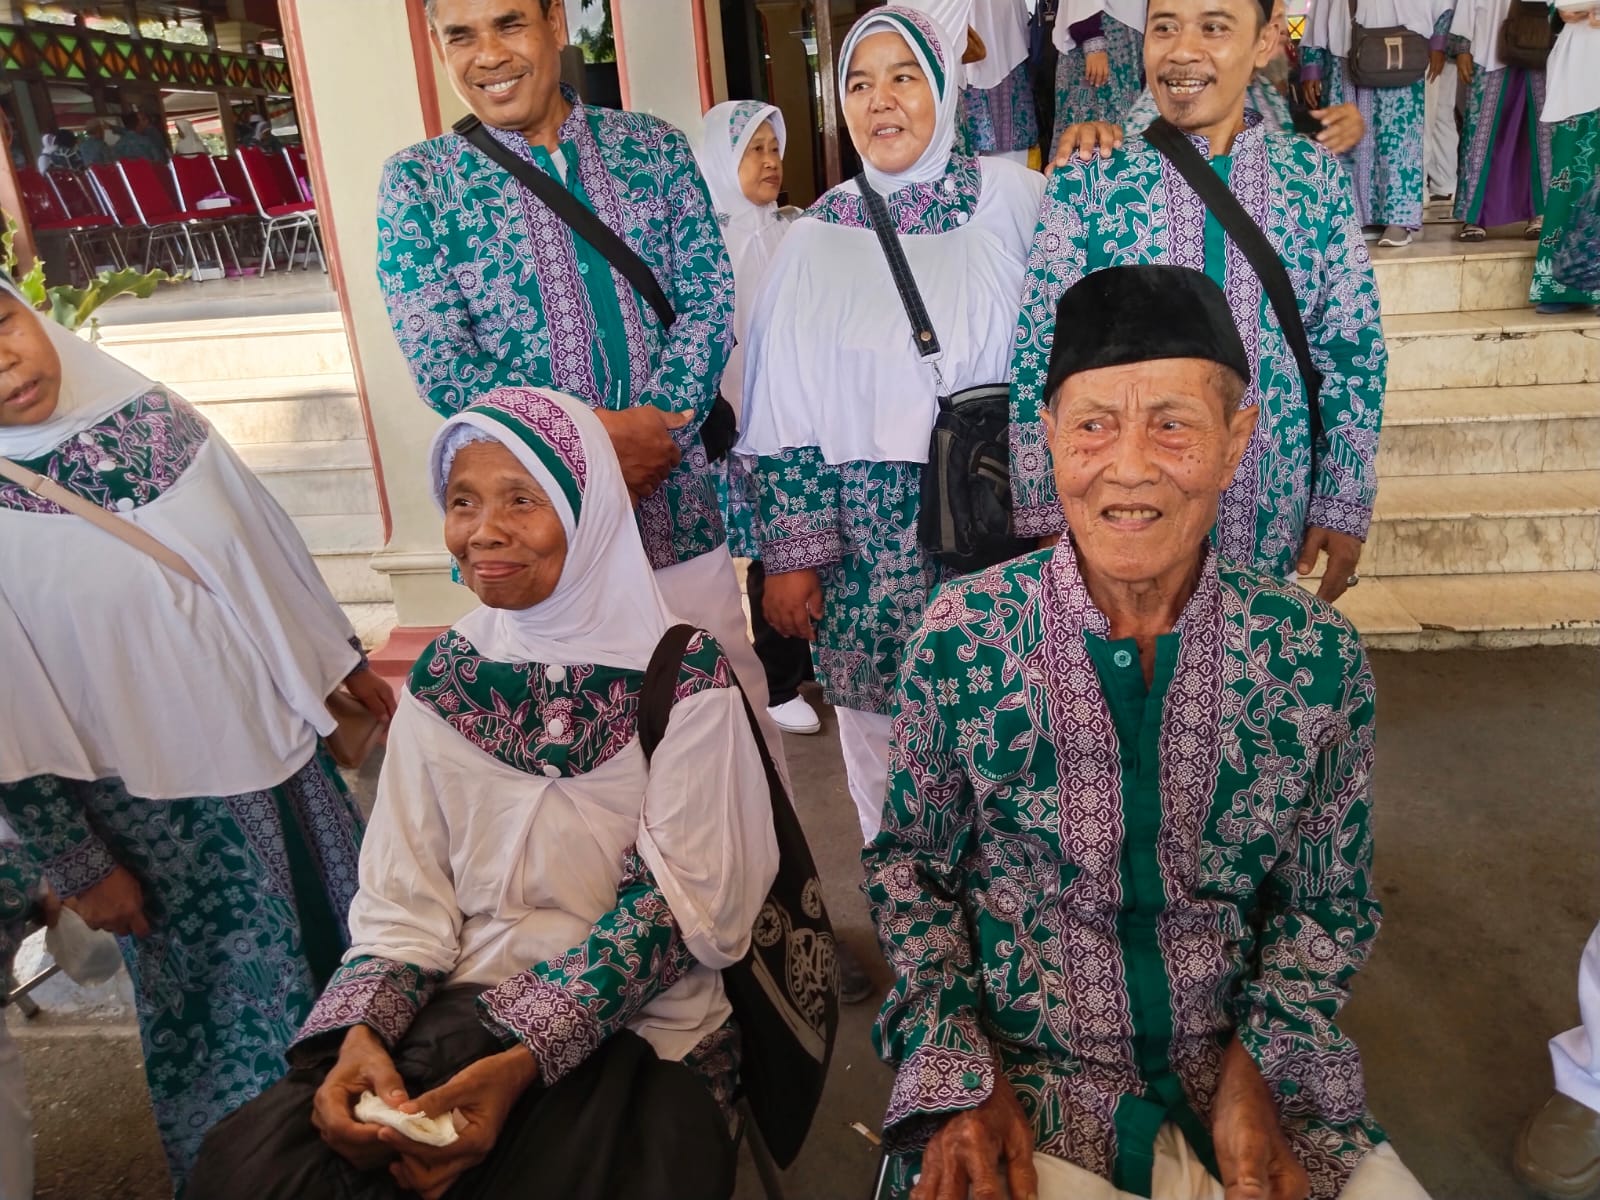 Calon Jemaah Haji Asal Kabupaten Tegal Tertua Usia 100 Tahun, Termuda 19 Tahun